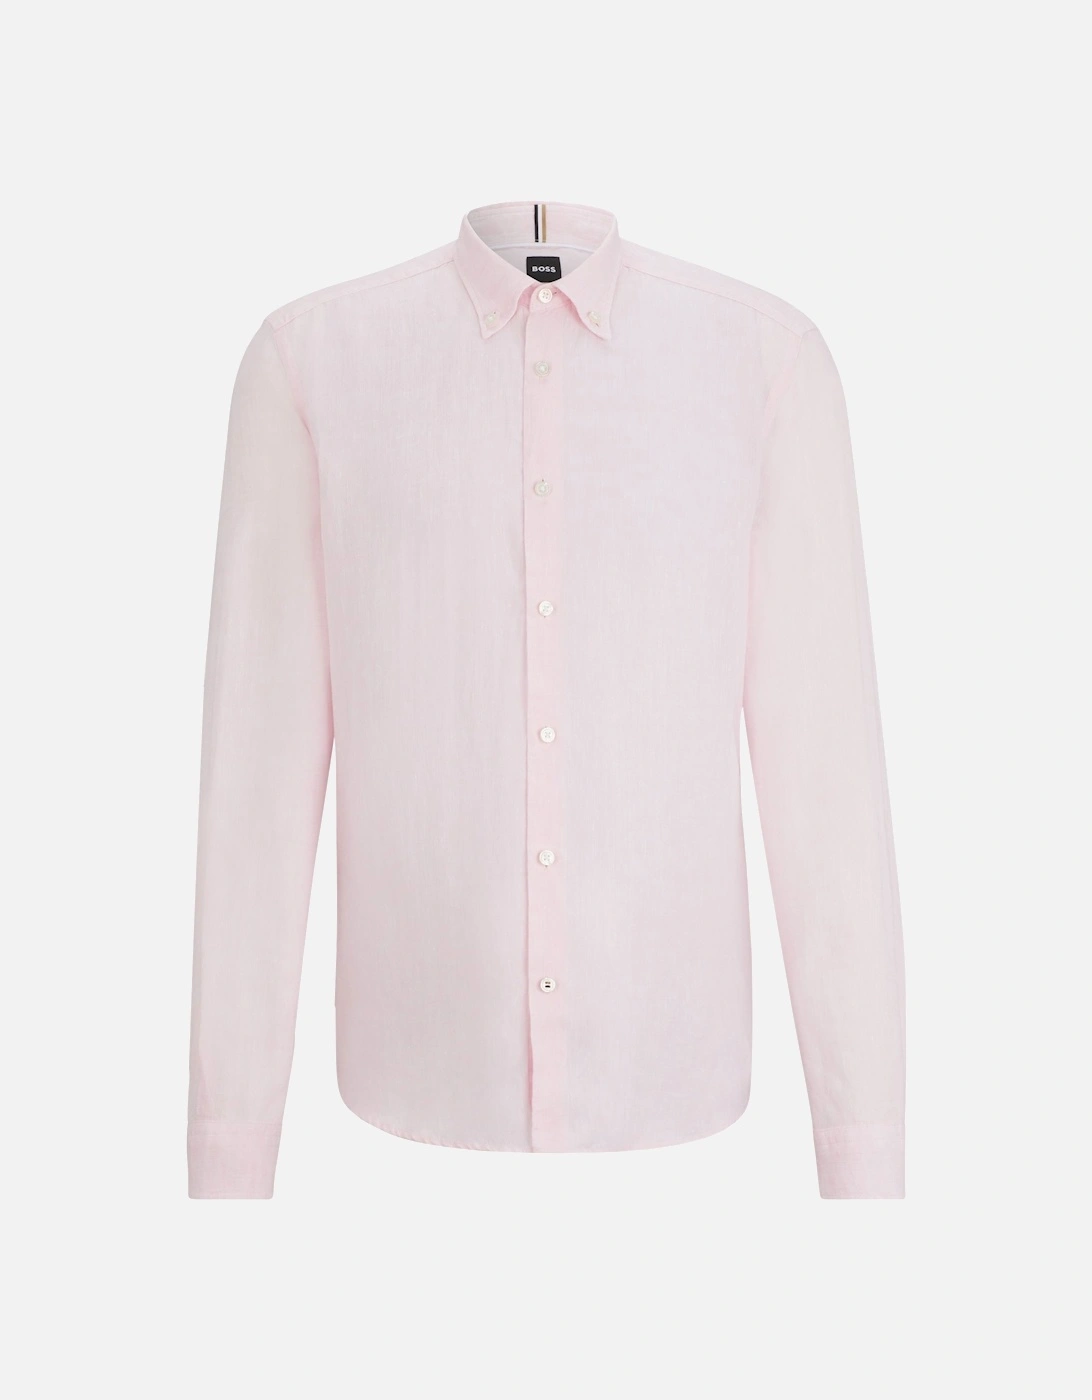 Boss S-liam-s-bd-c1-242 Long Sleeved Shirt Light Pastel Pink, 4 of 3